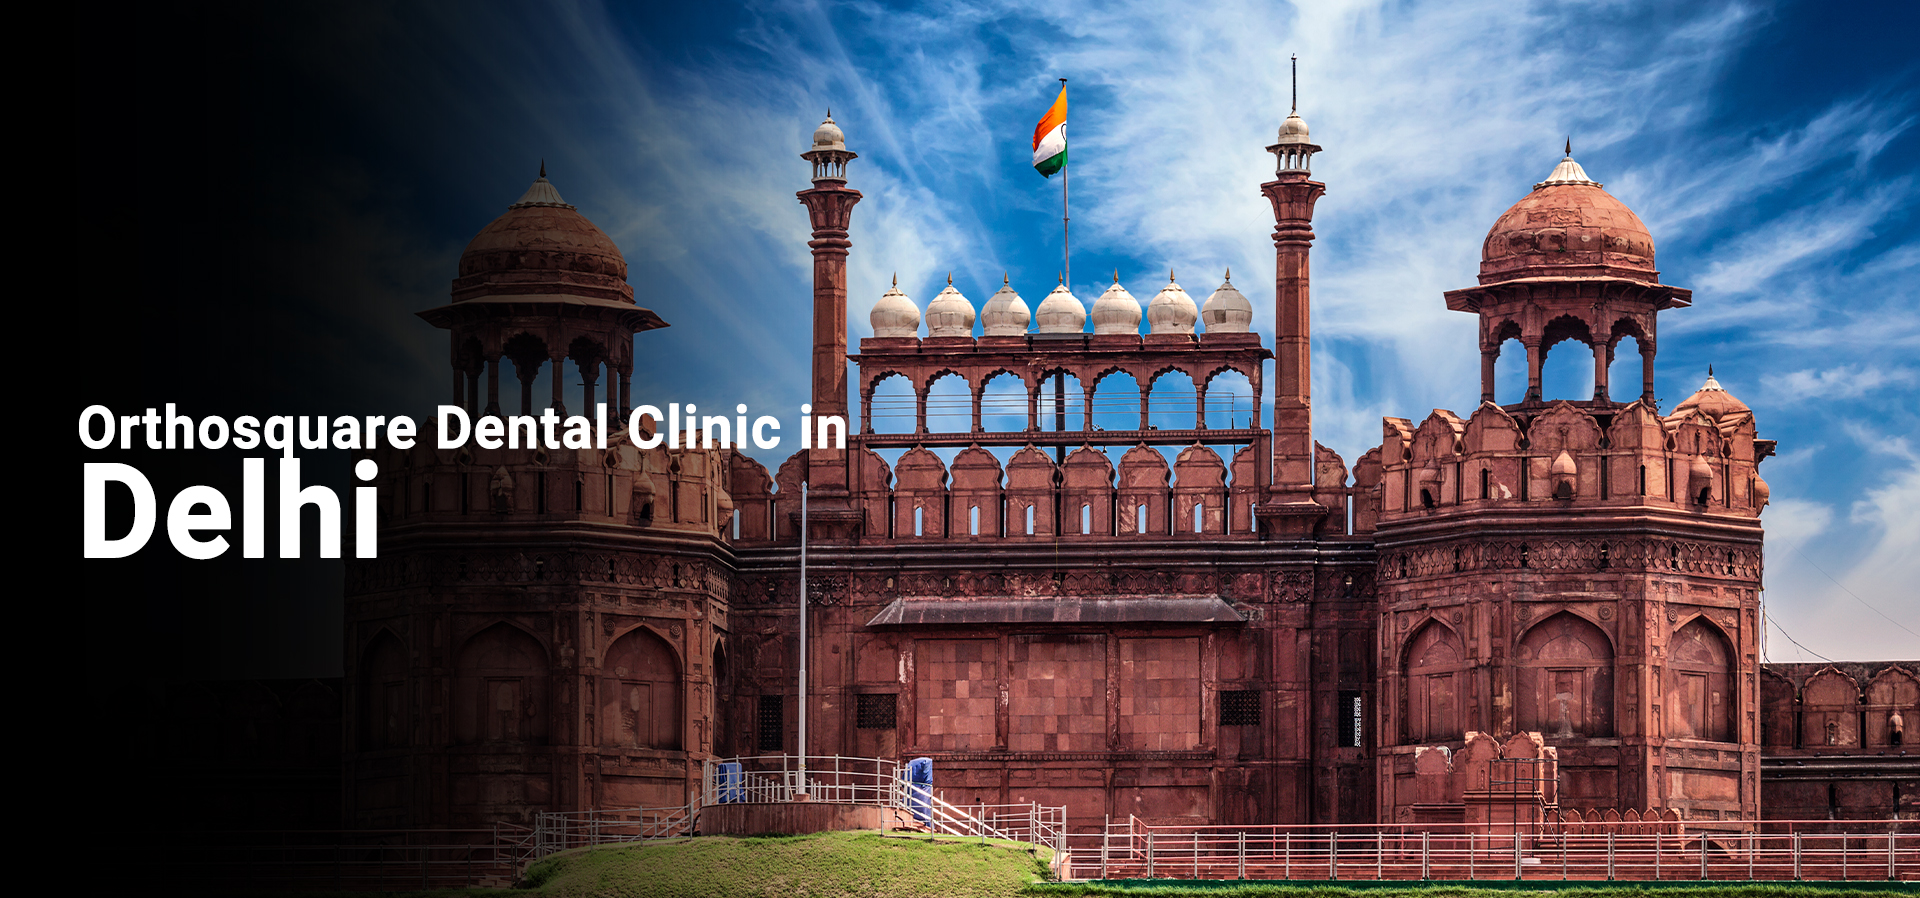 Delhi orthosquare dental clinic